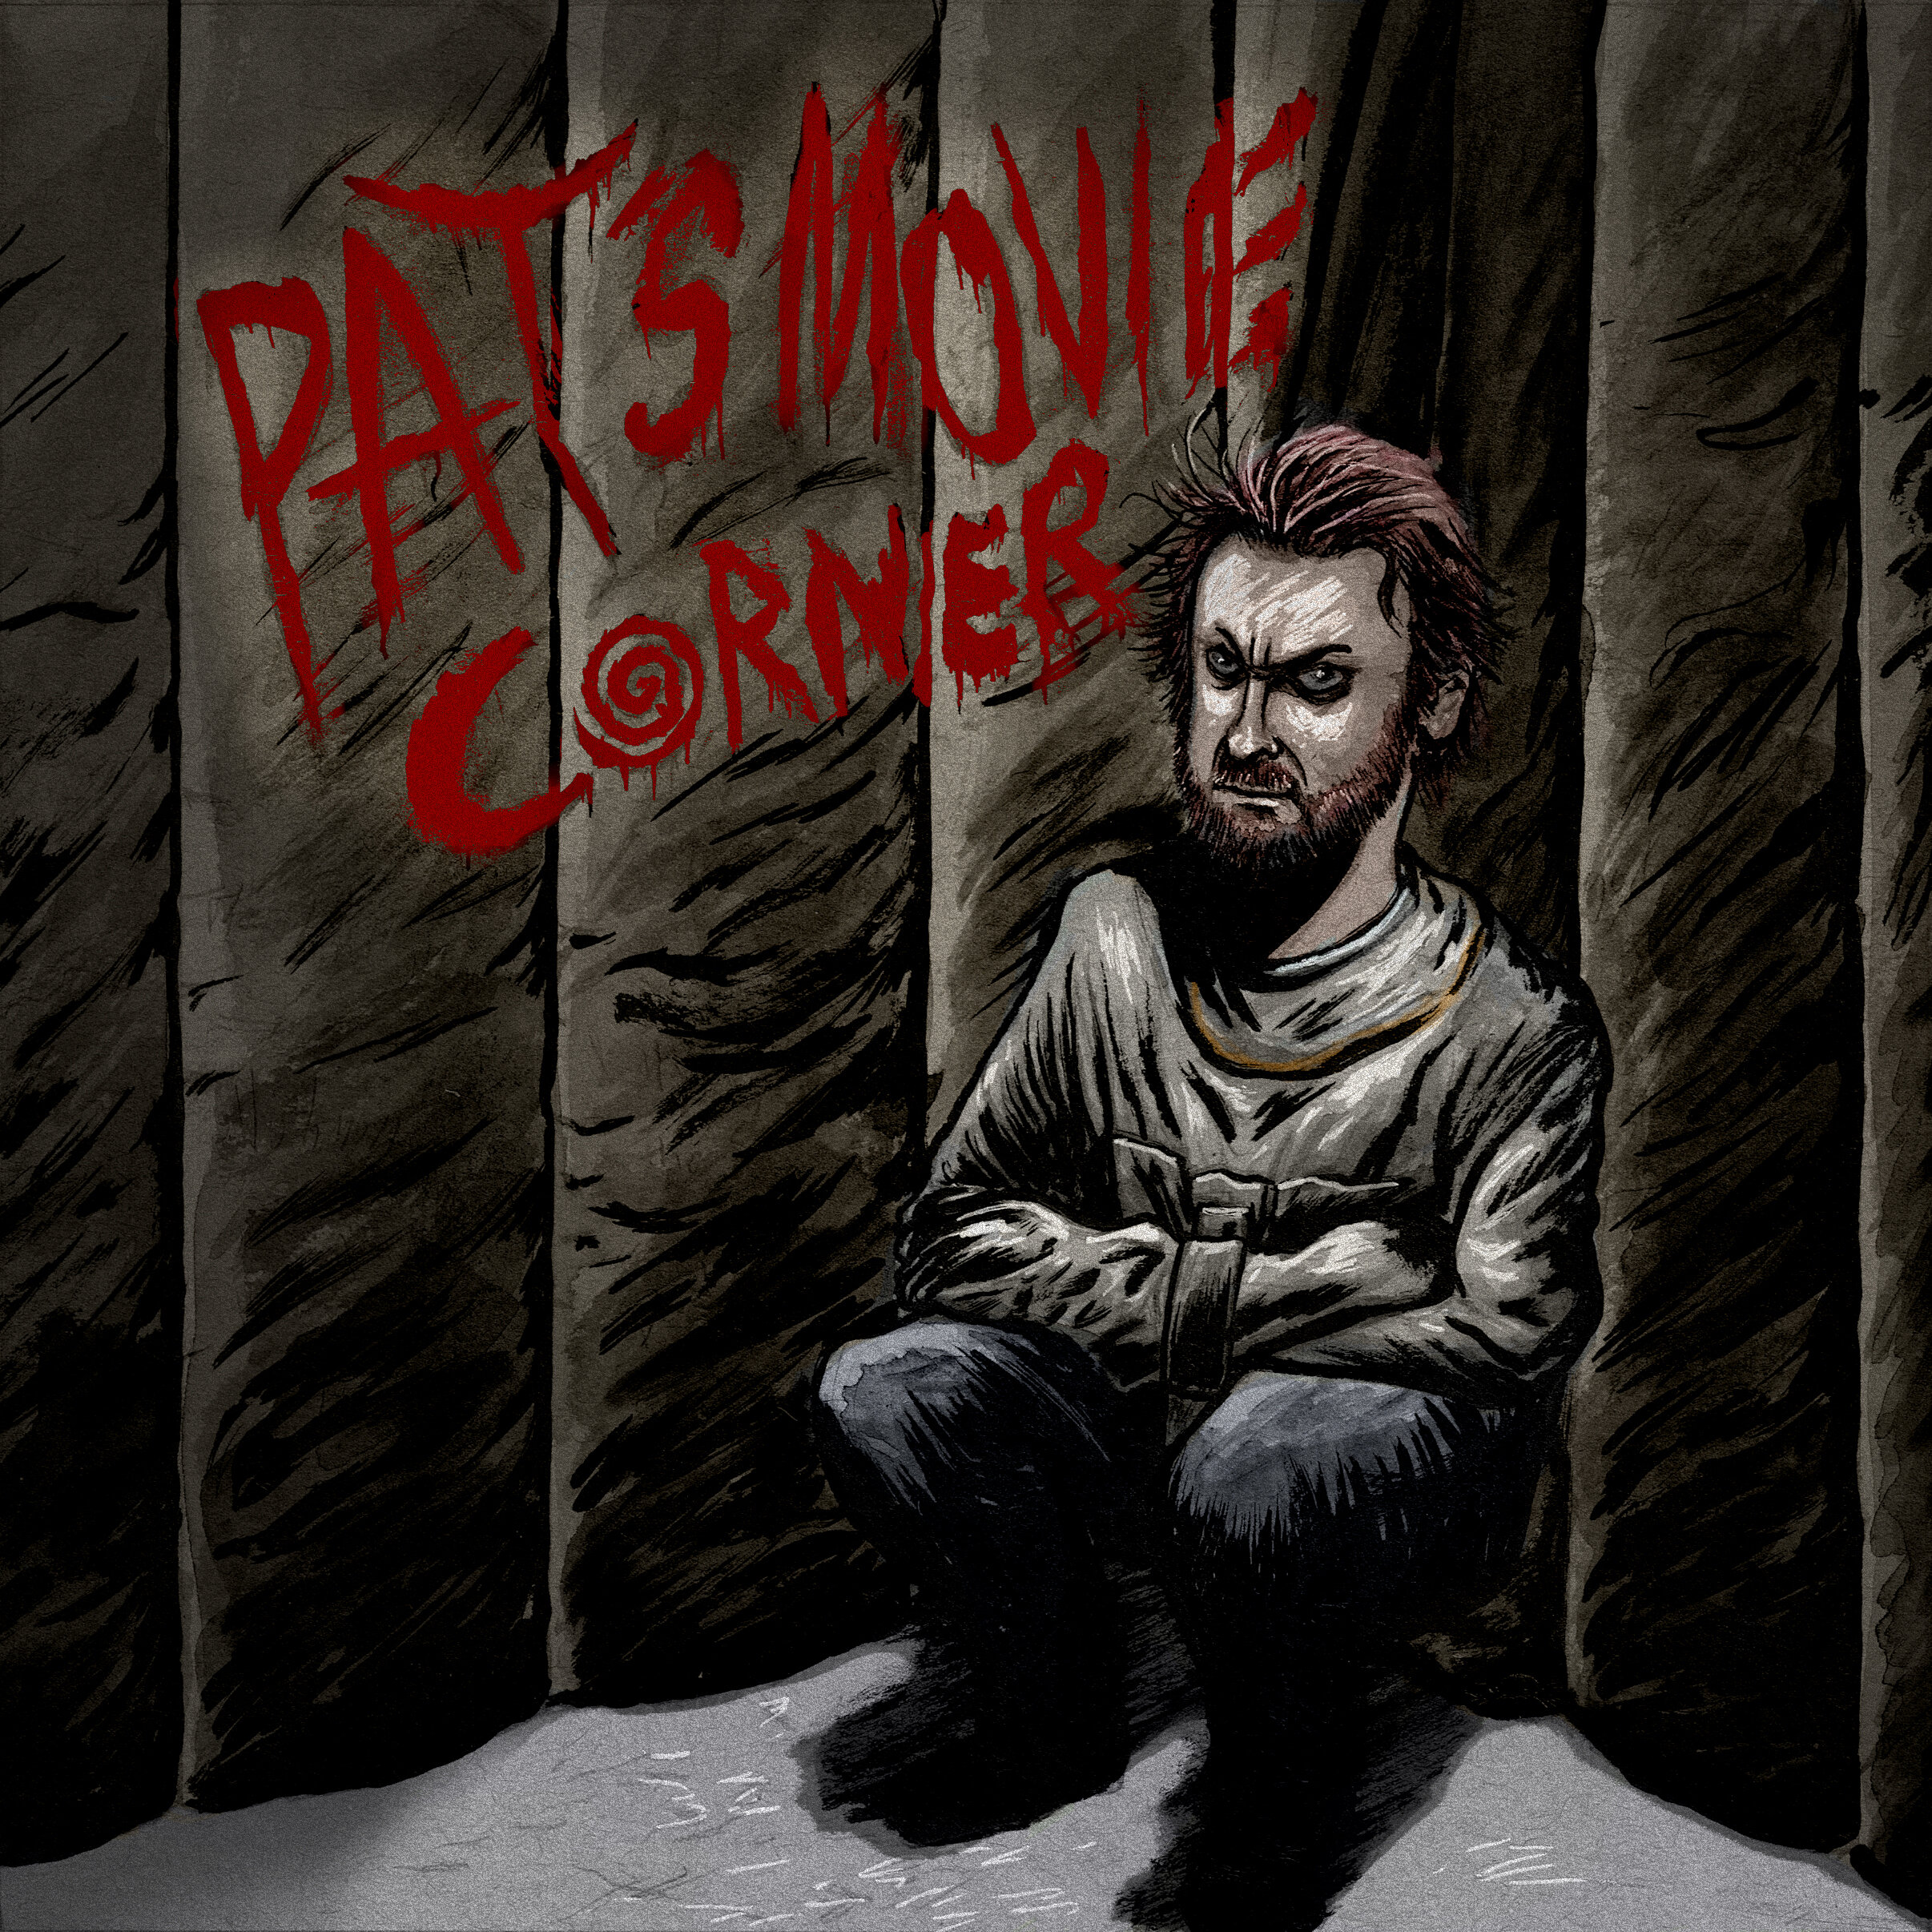 Pat's movie corner art_2020-07-21_100254.jpg